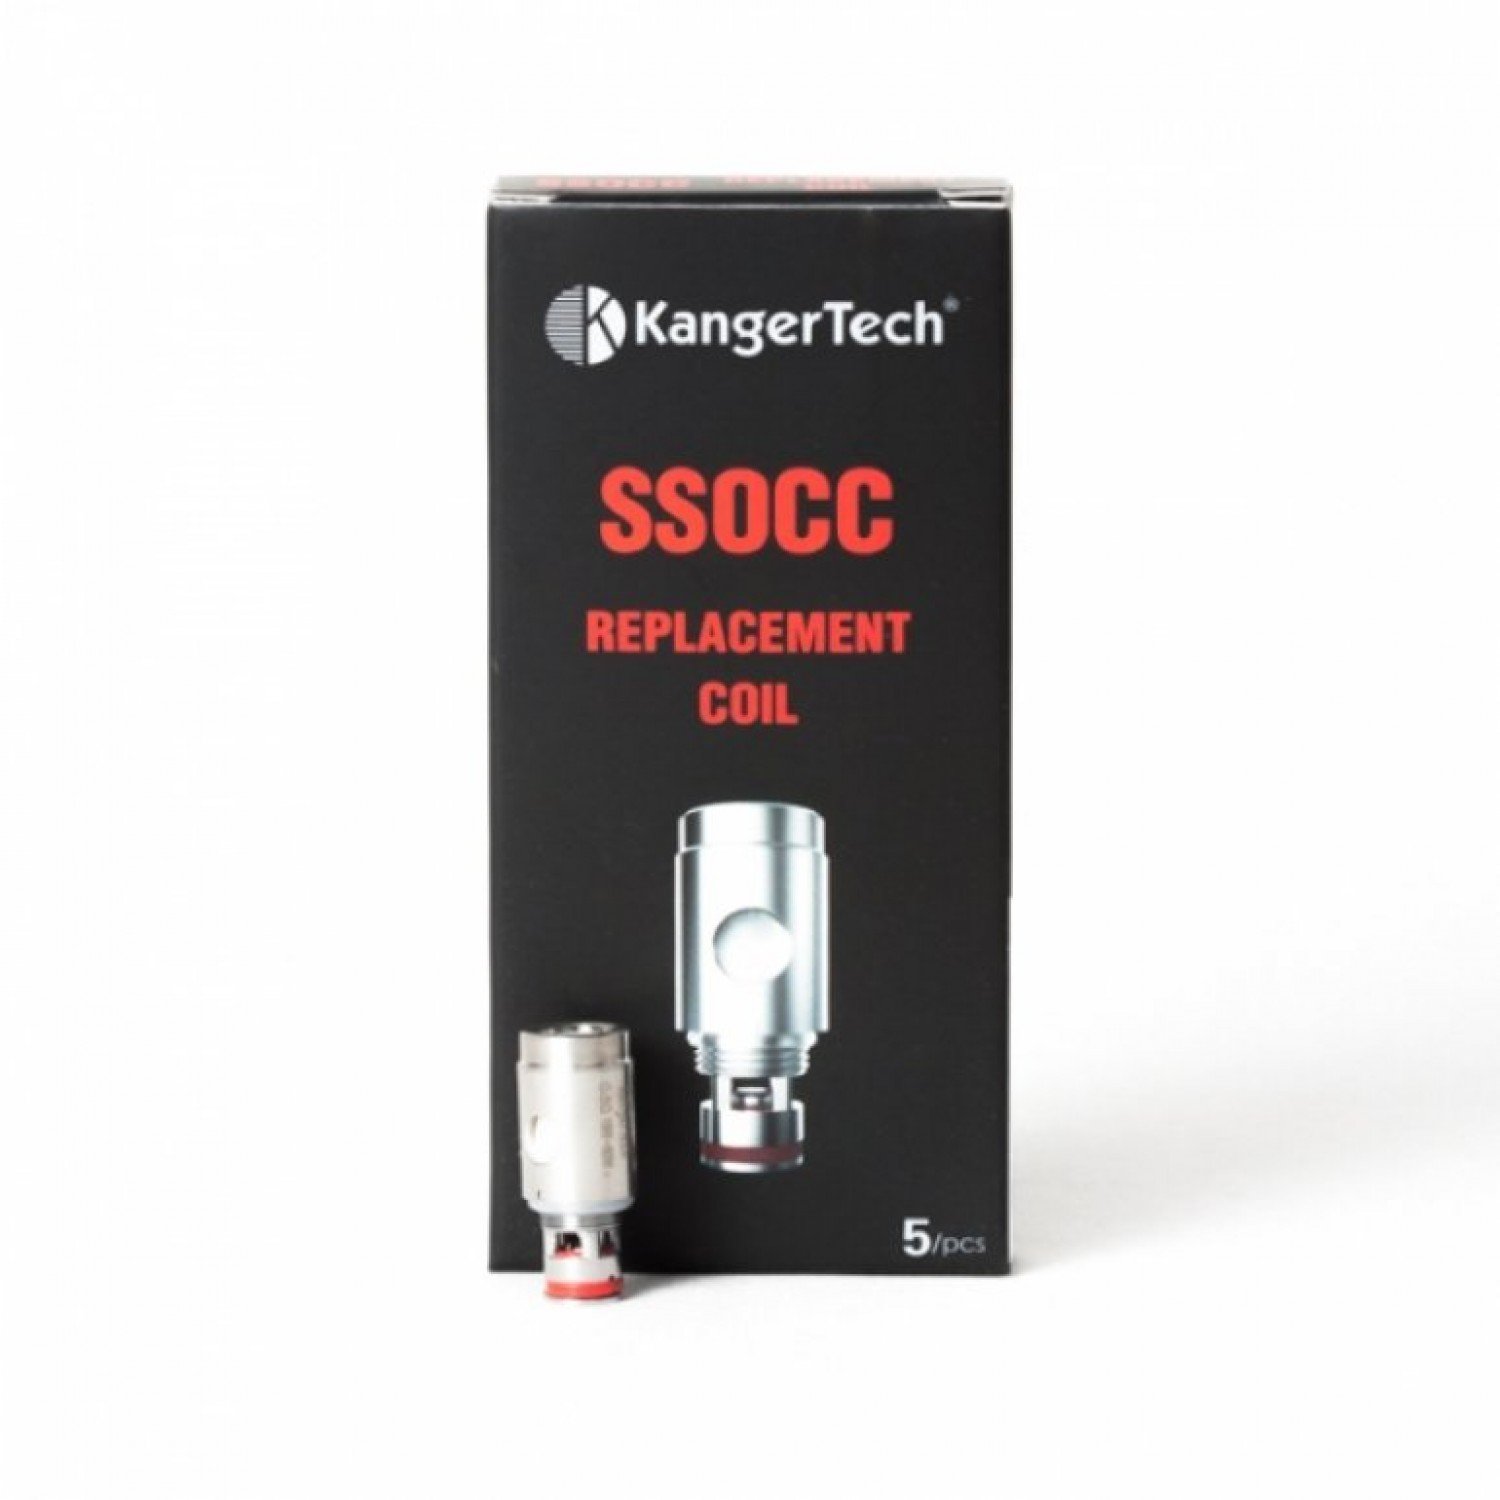 KangerTech SSOCC Replacement 5li paket Coil